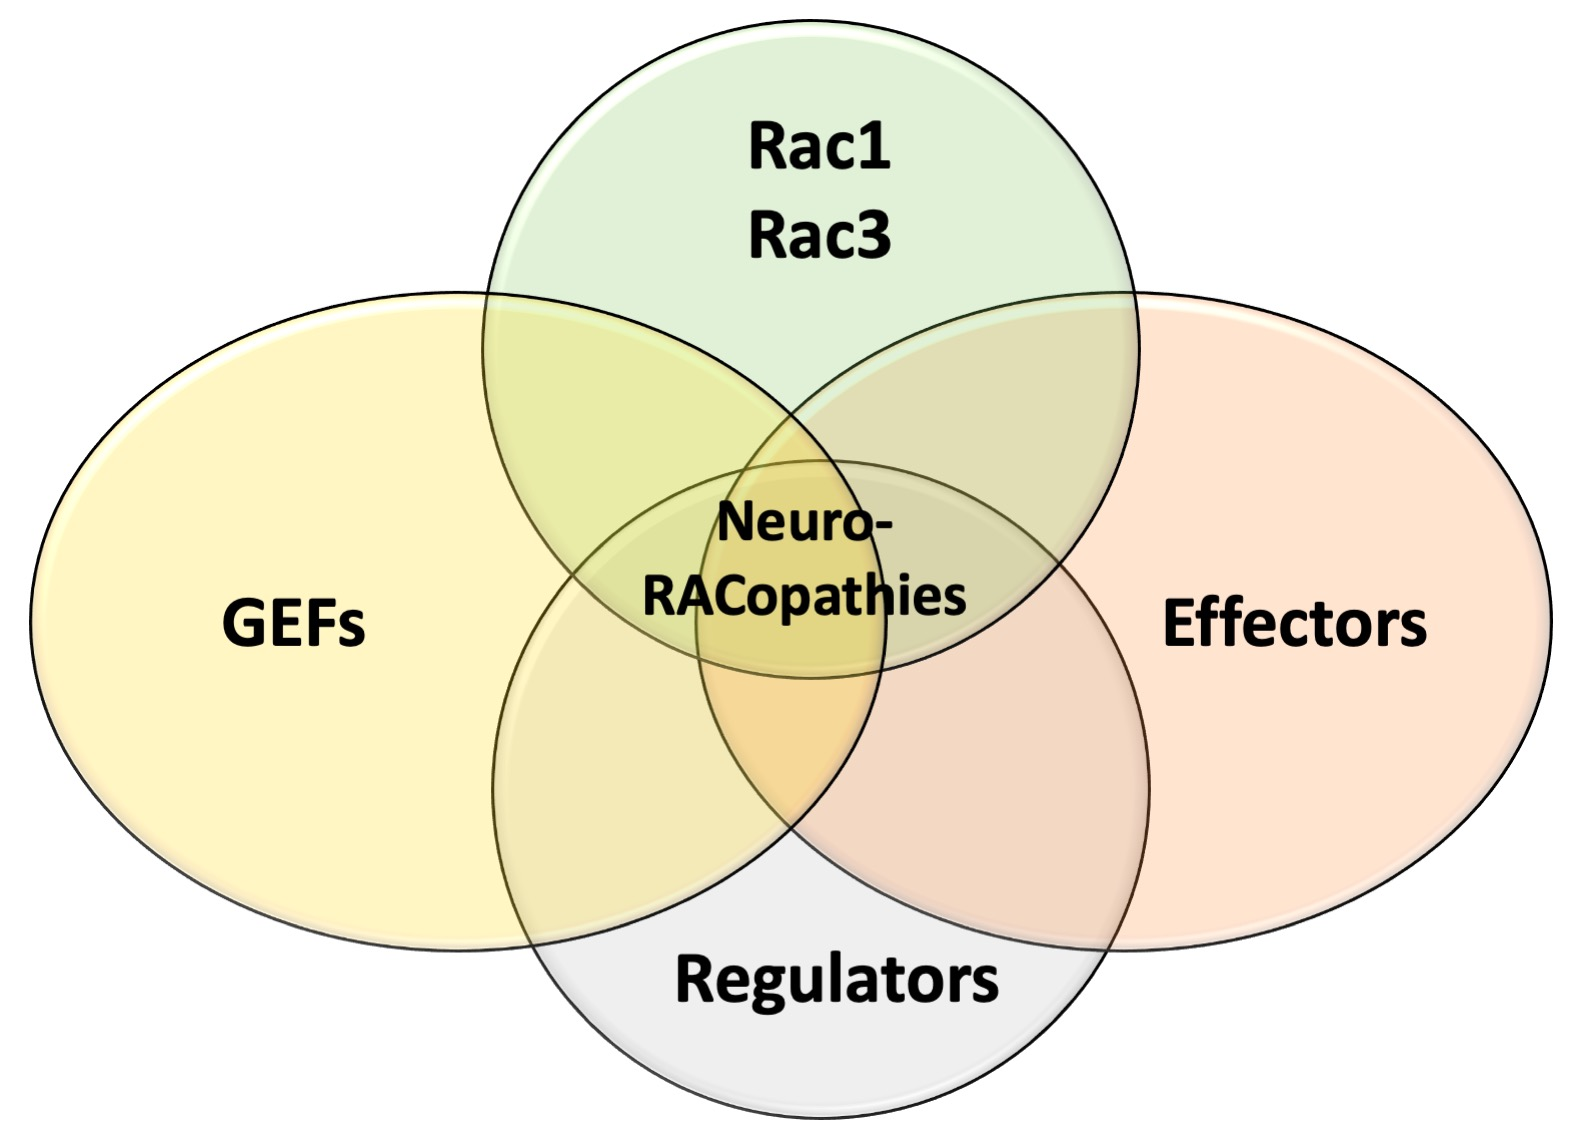 Rac1 Regulates Neuronal Polarization through the WAVE Complex